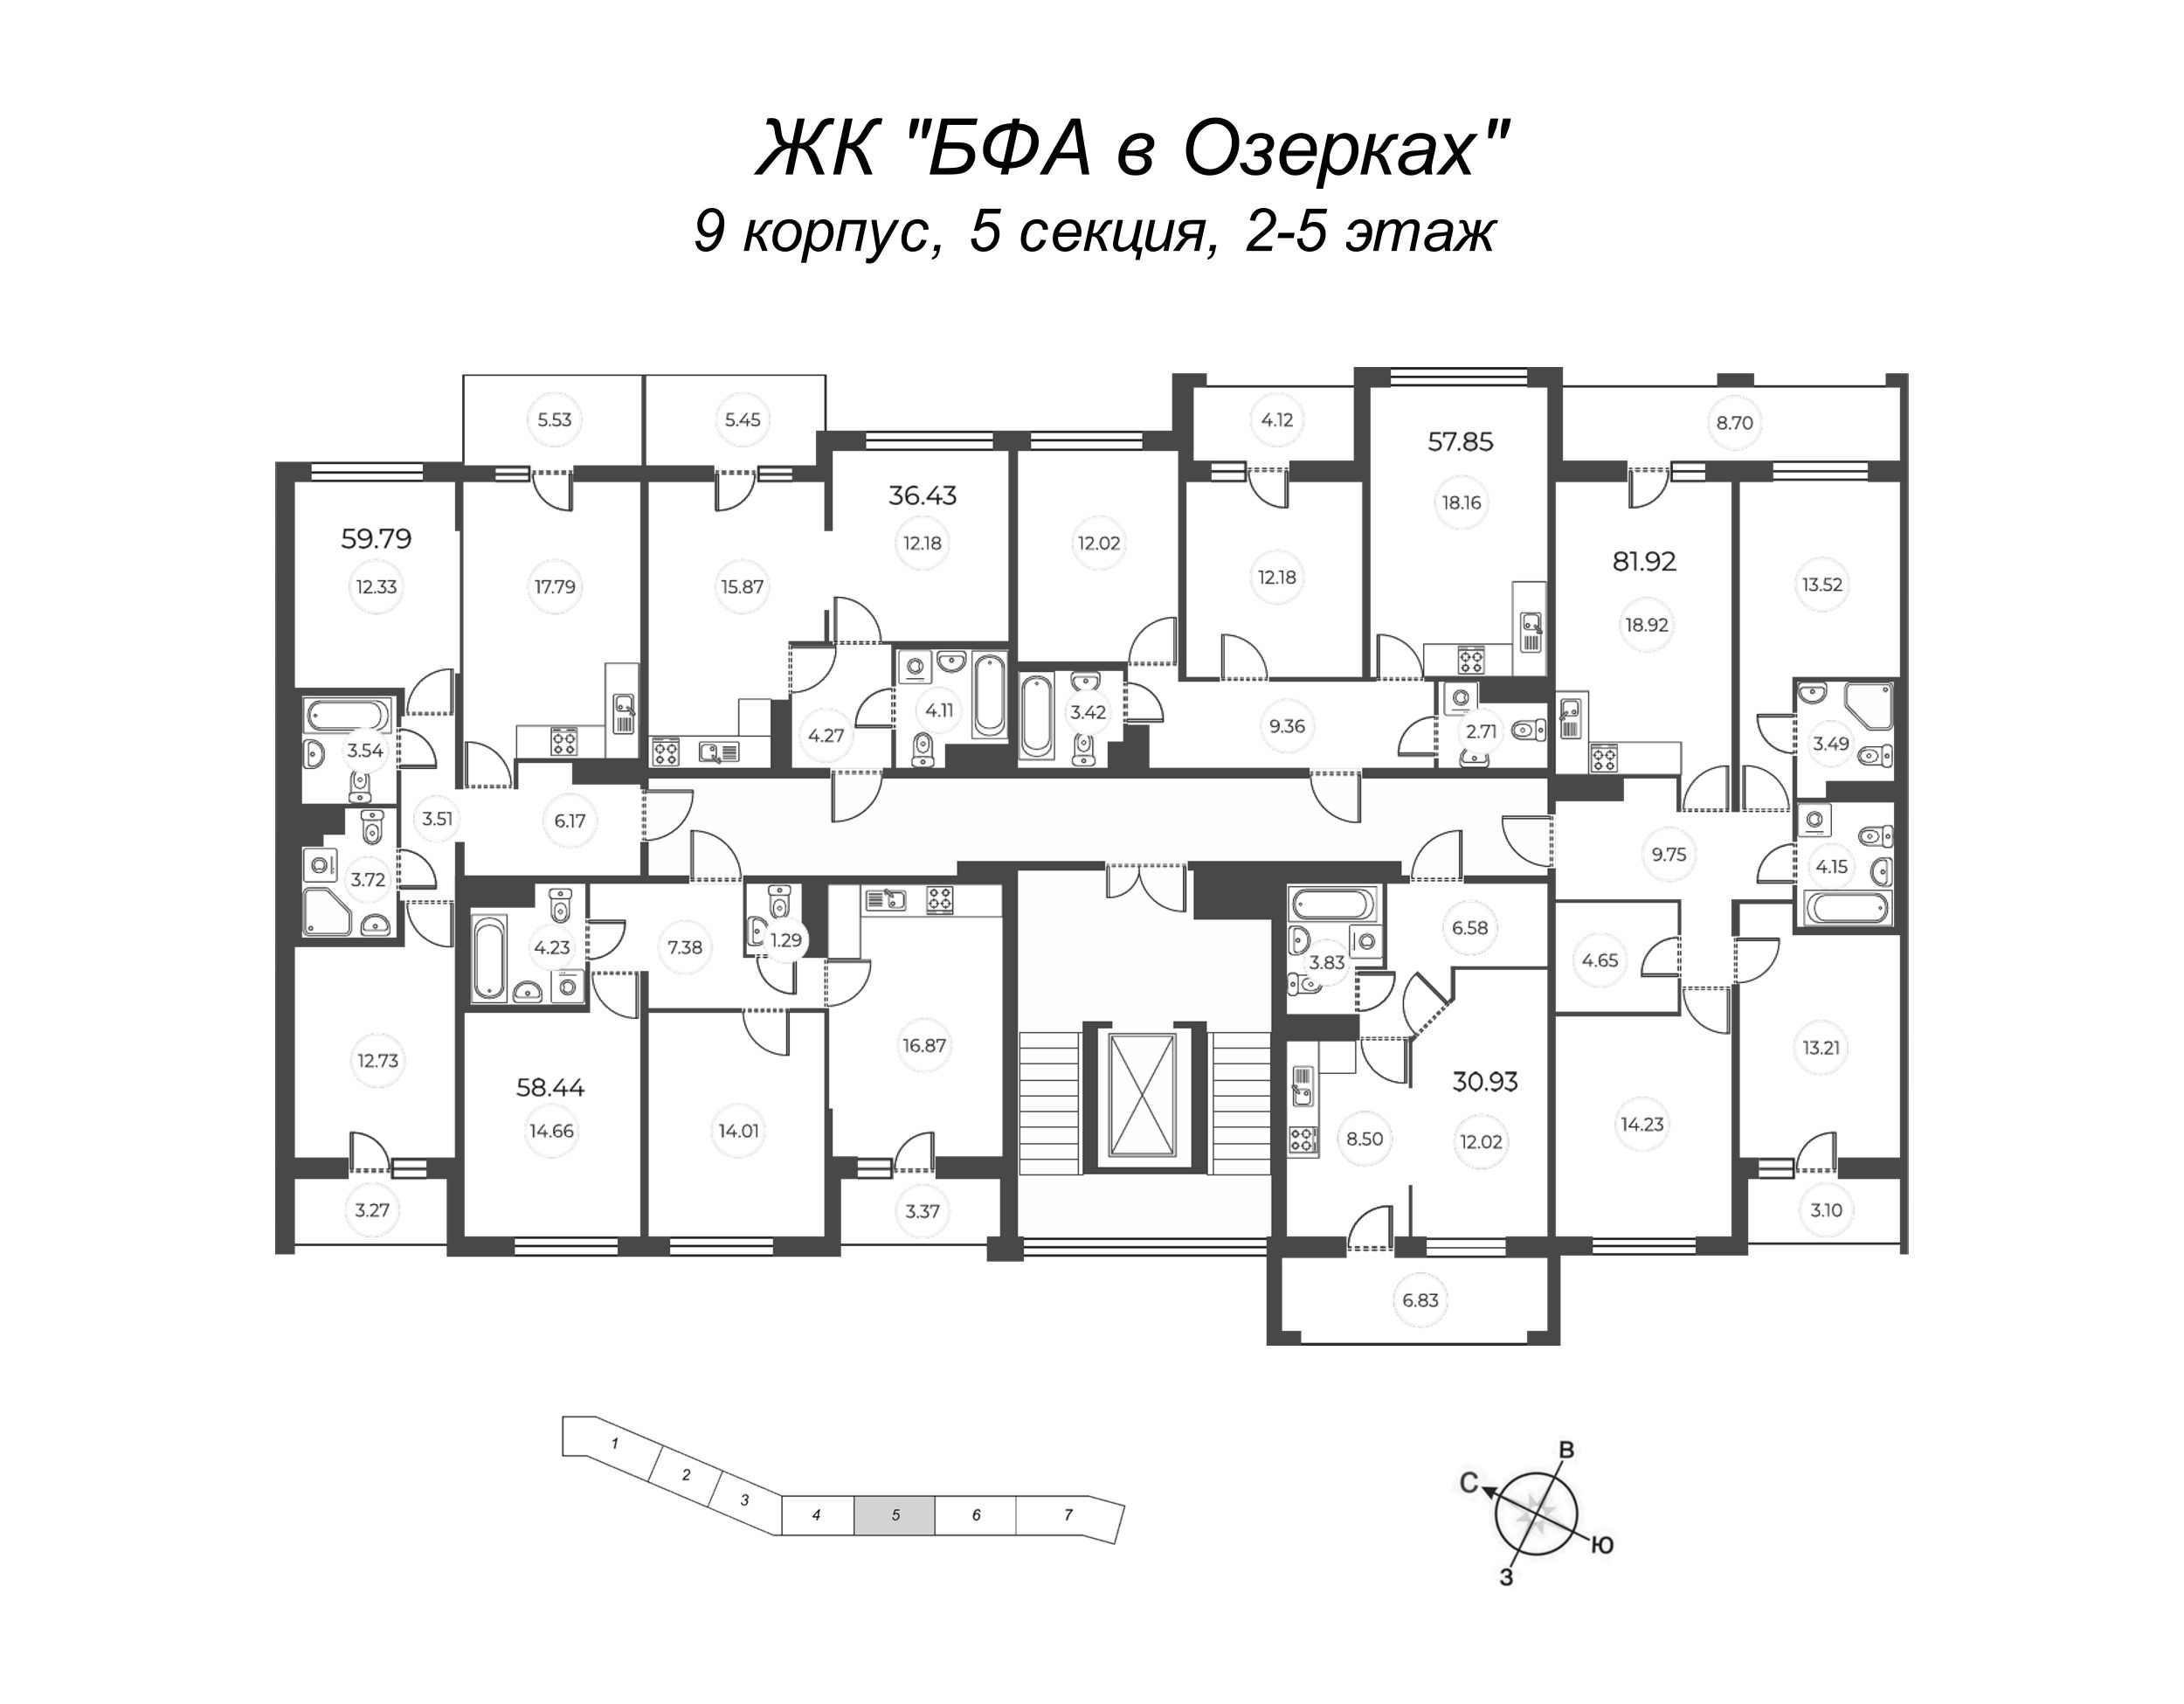 4-комнатная (Евро) квартира, 87.82 м² - планировка этажа